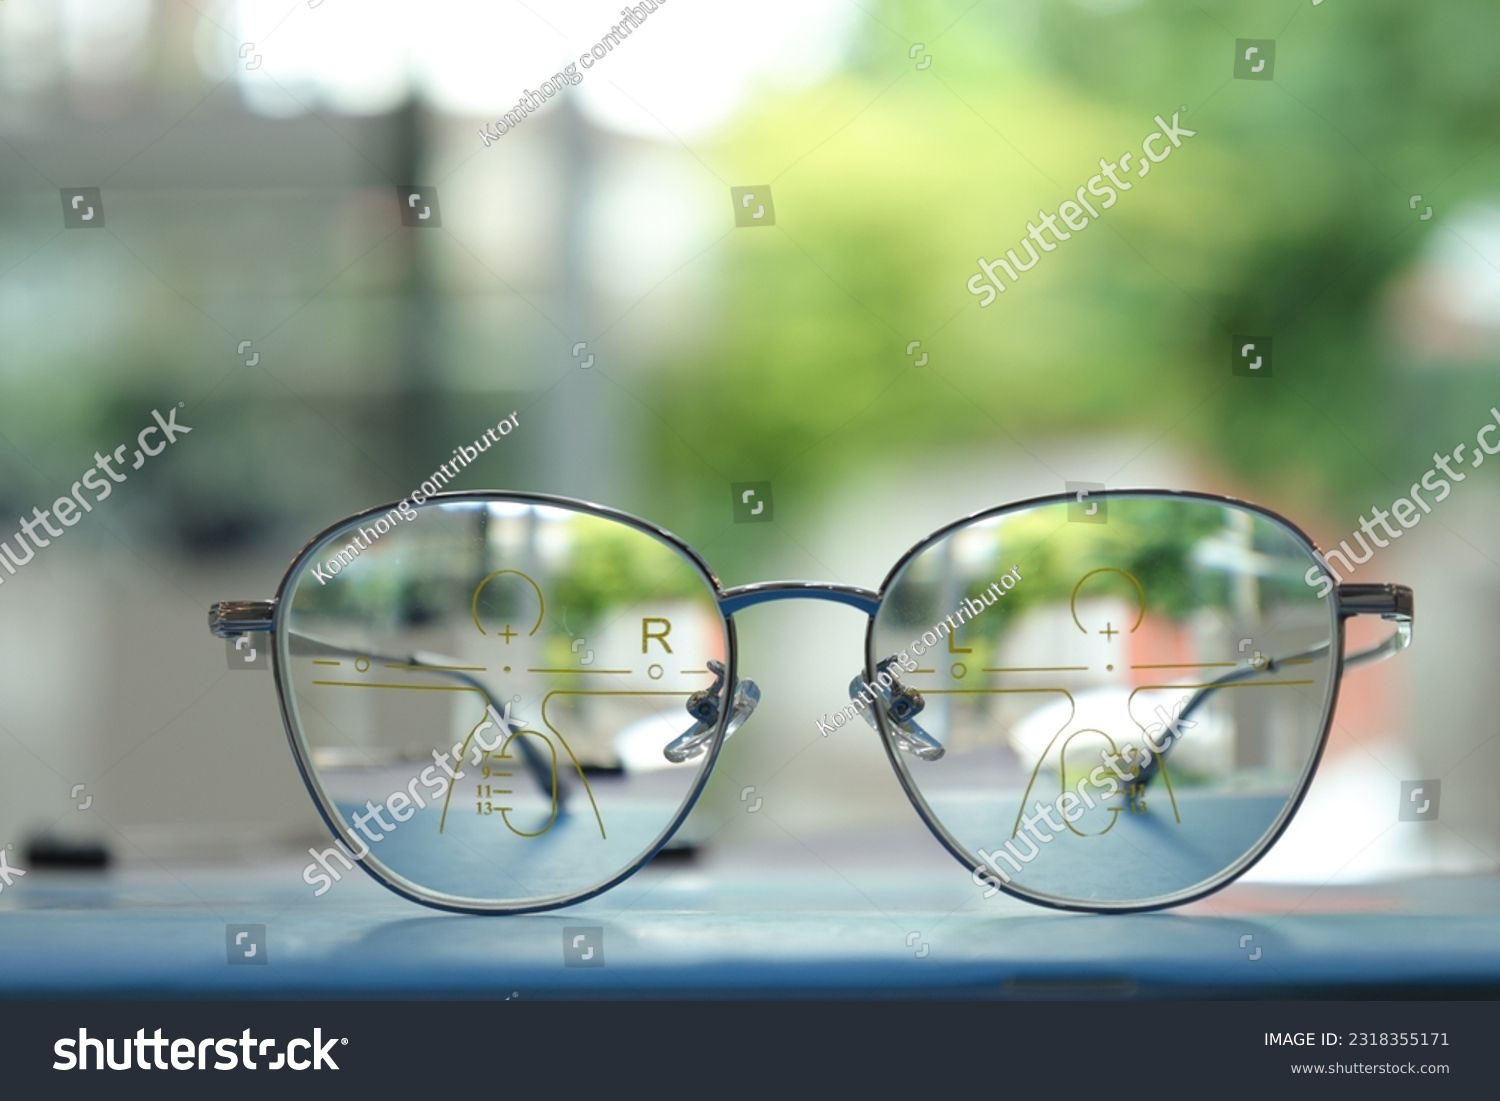 Eyeglasses on table, progressive lenses, eyeglasses for the elderly, glasses progressive lens, eyeglass progressive lens, close-up of glasses on lenses test, looking through glasses #2318355171